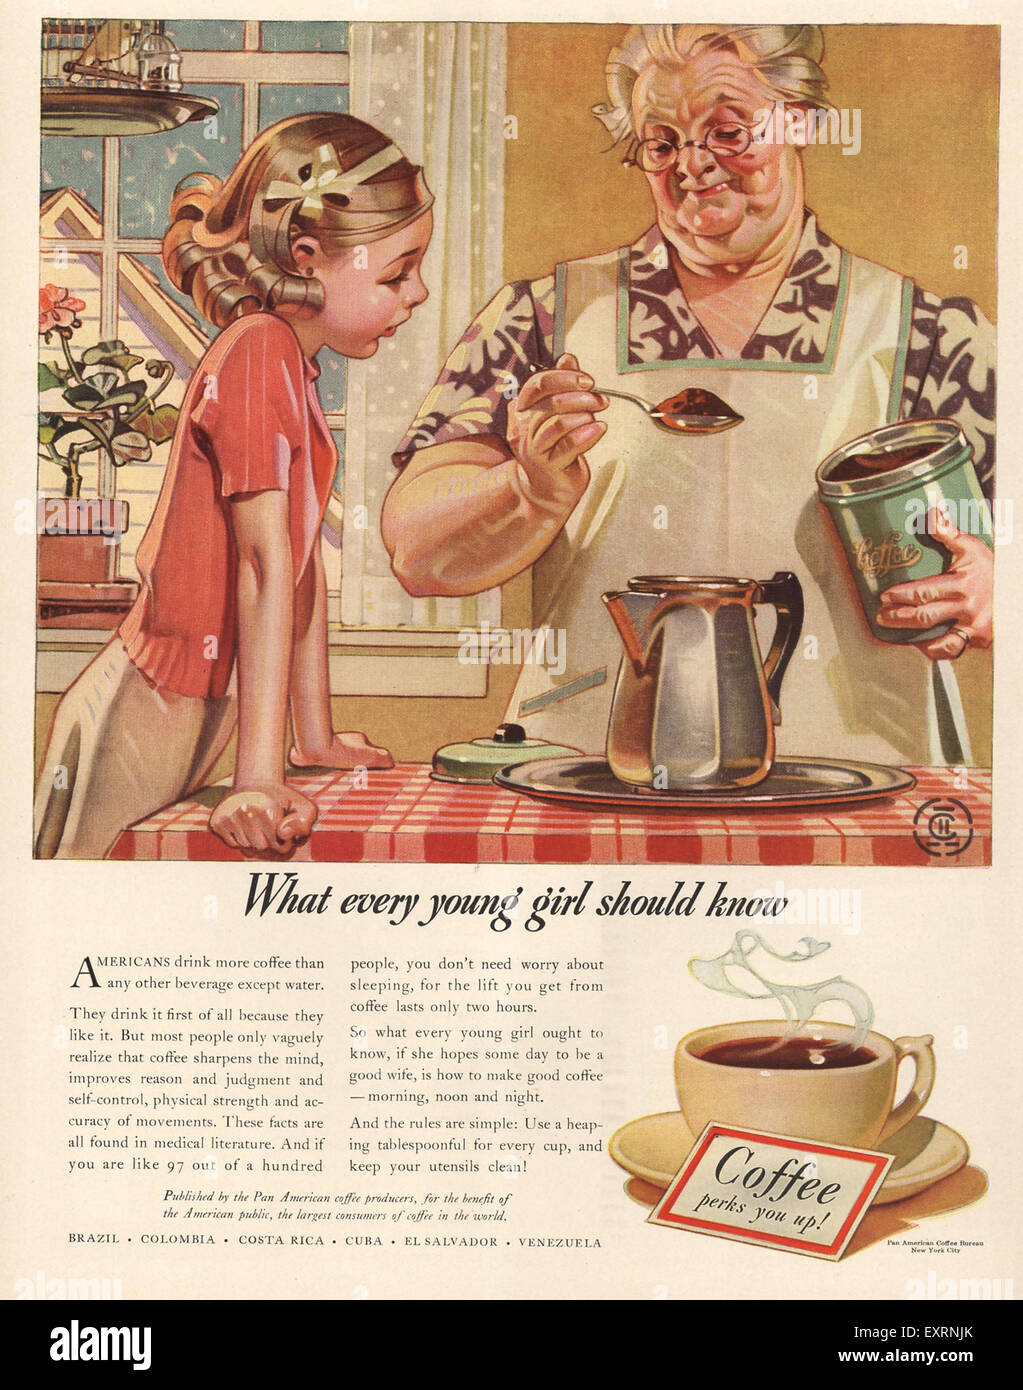 1950s USA Coffee Perks You Up! Magazine Advert Stock Photo